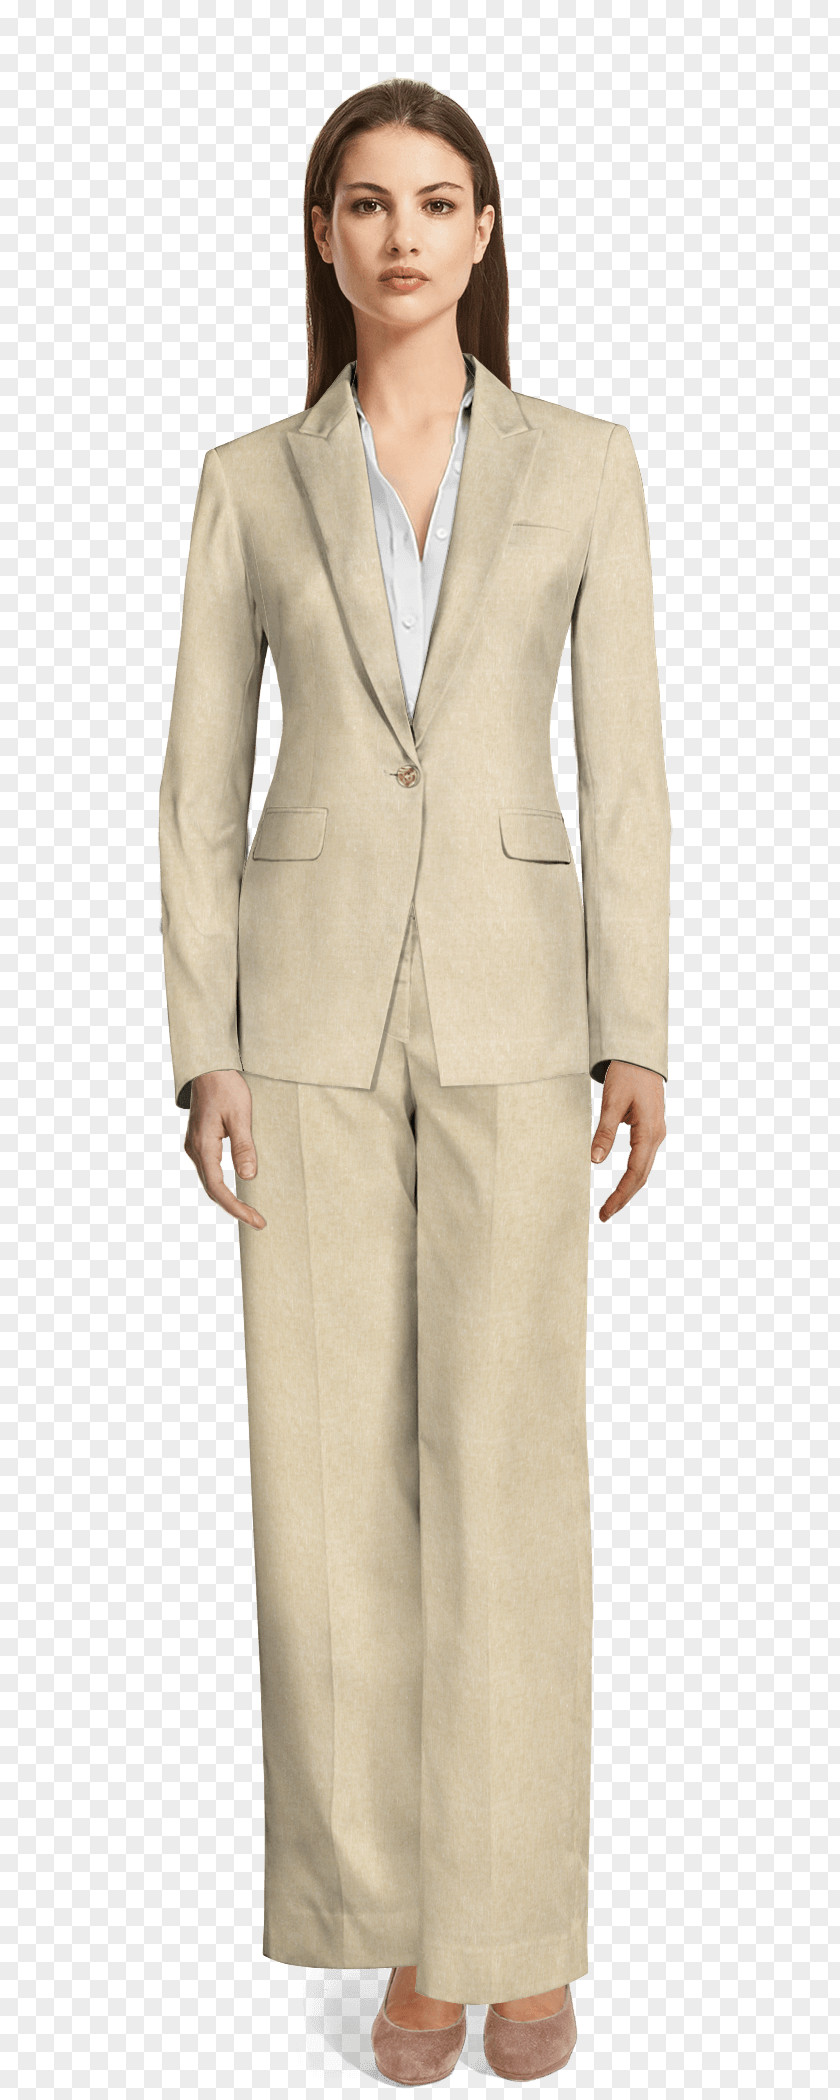 Suit Tuxedo Double-breasted Jakkupuku Skirt PNG